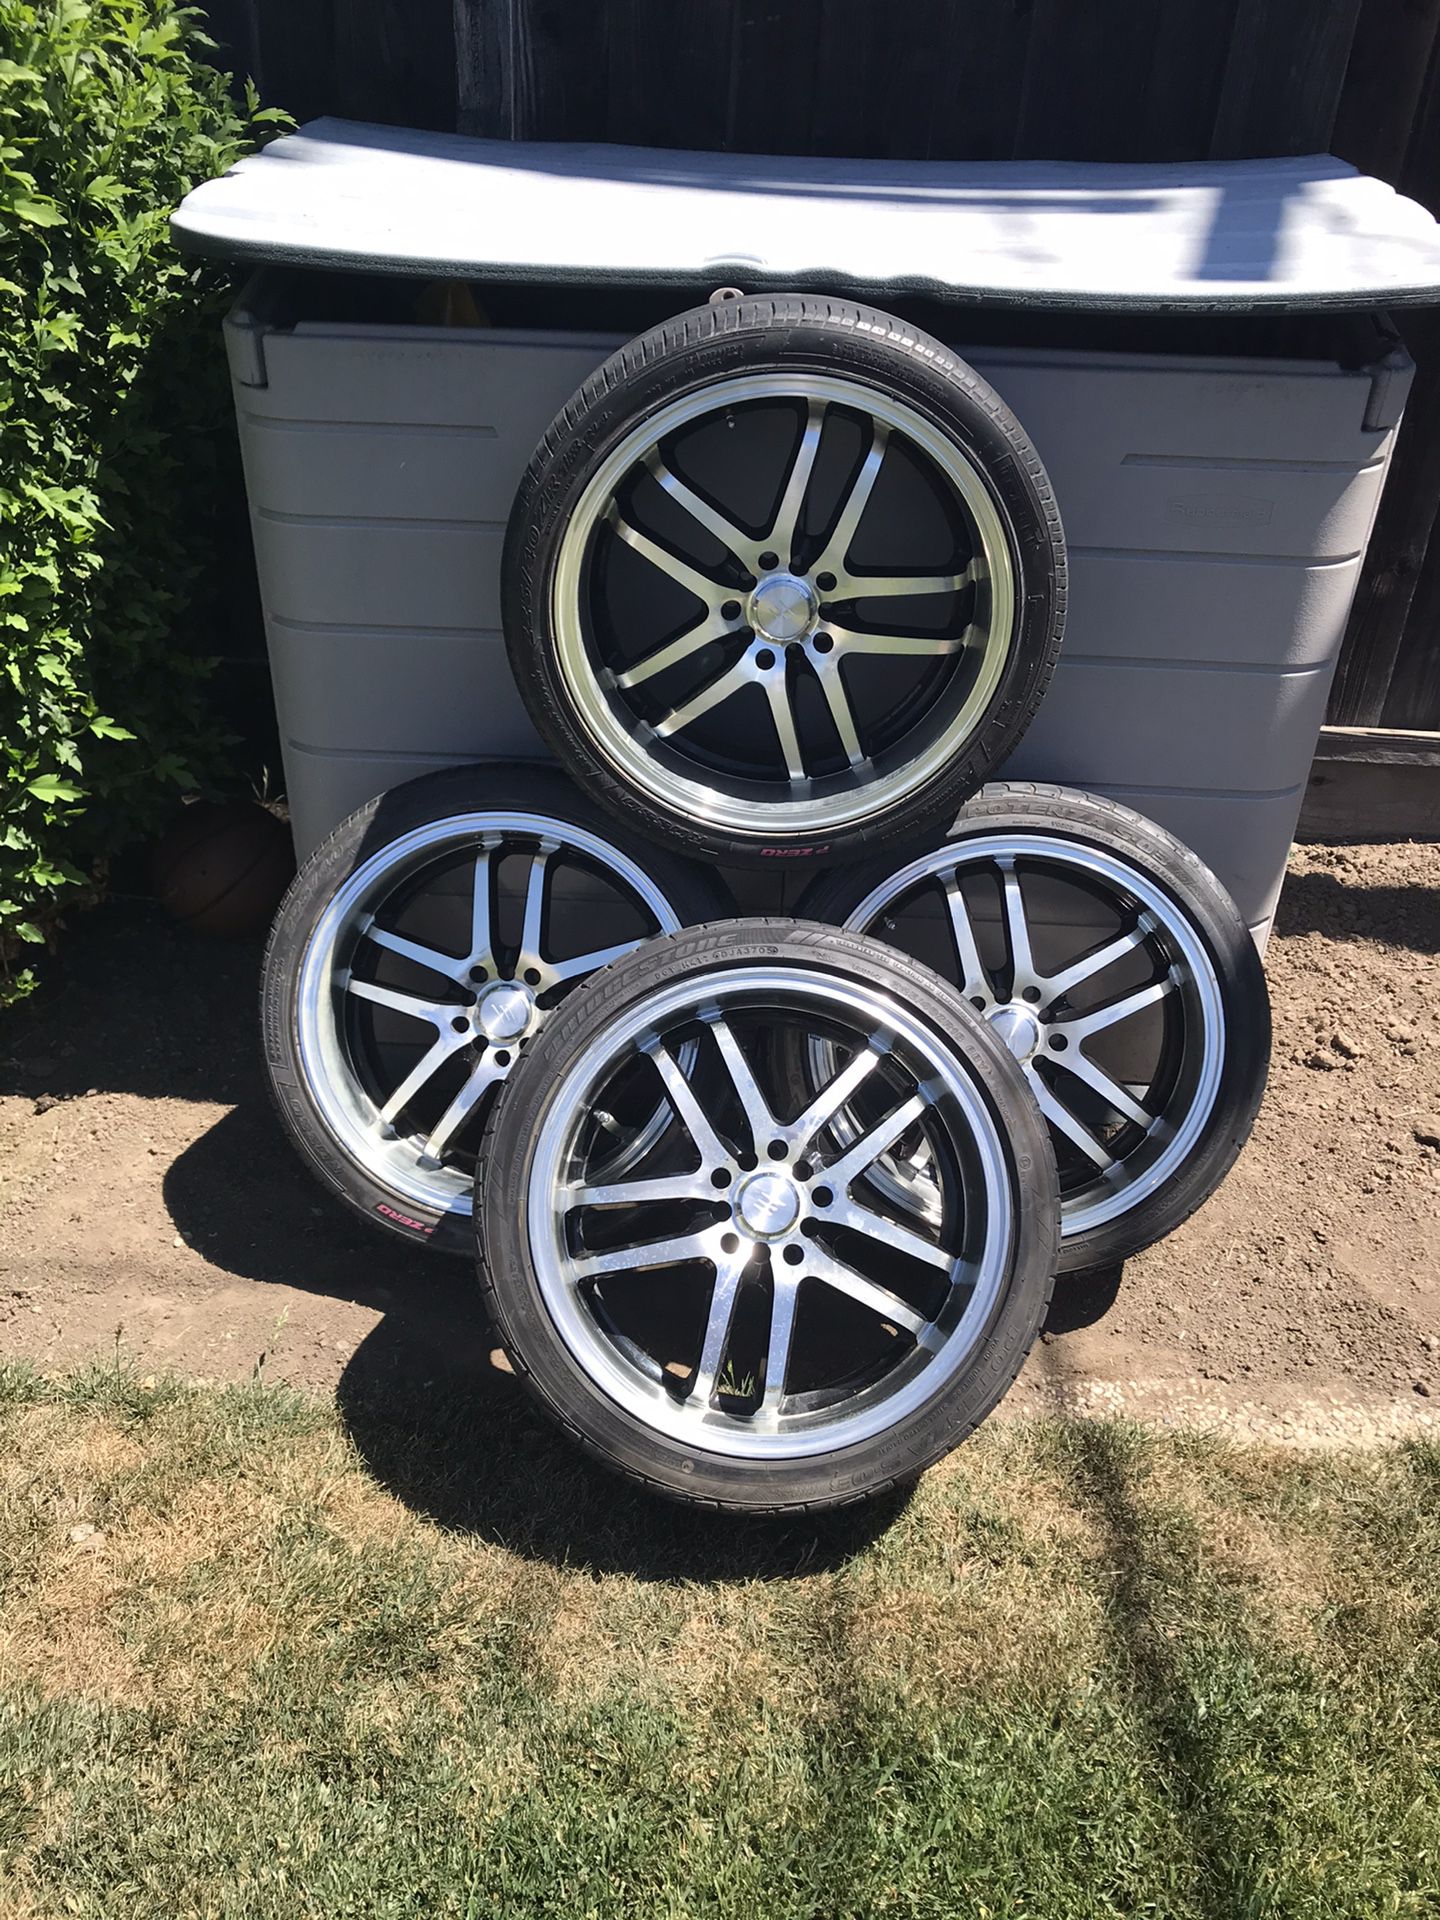 Honda Toyota wheels/rims 18’s